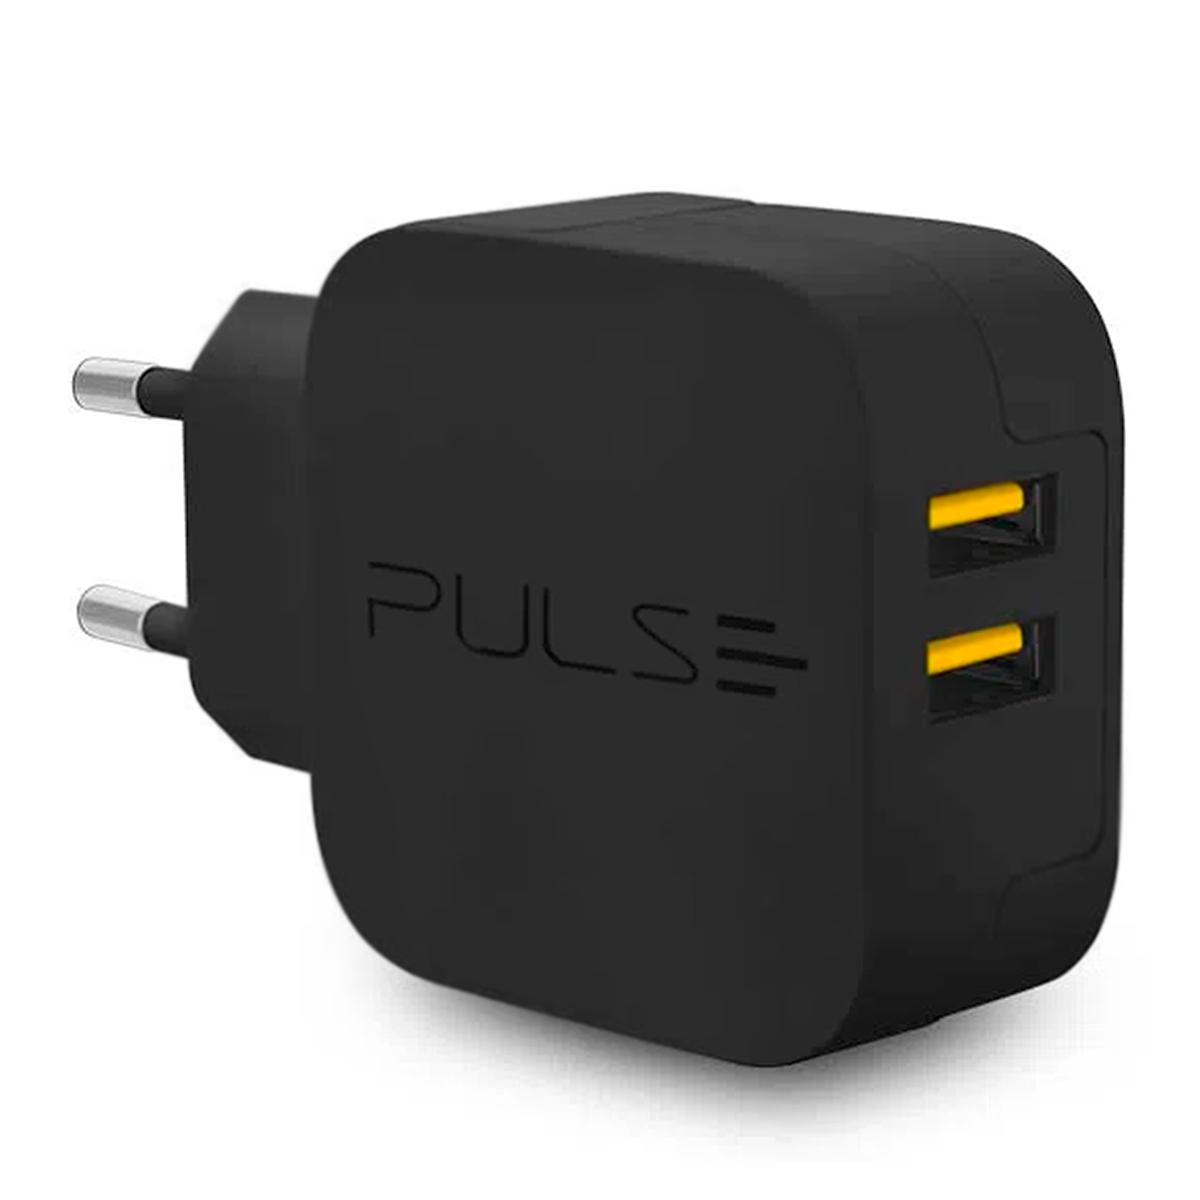 Carregador de Parede Premium USB - com 2 Portas - Multilaser Pulse CB151